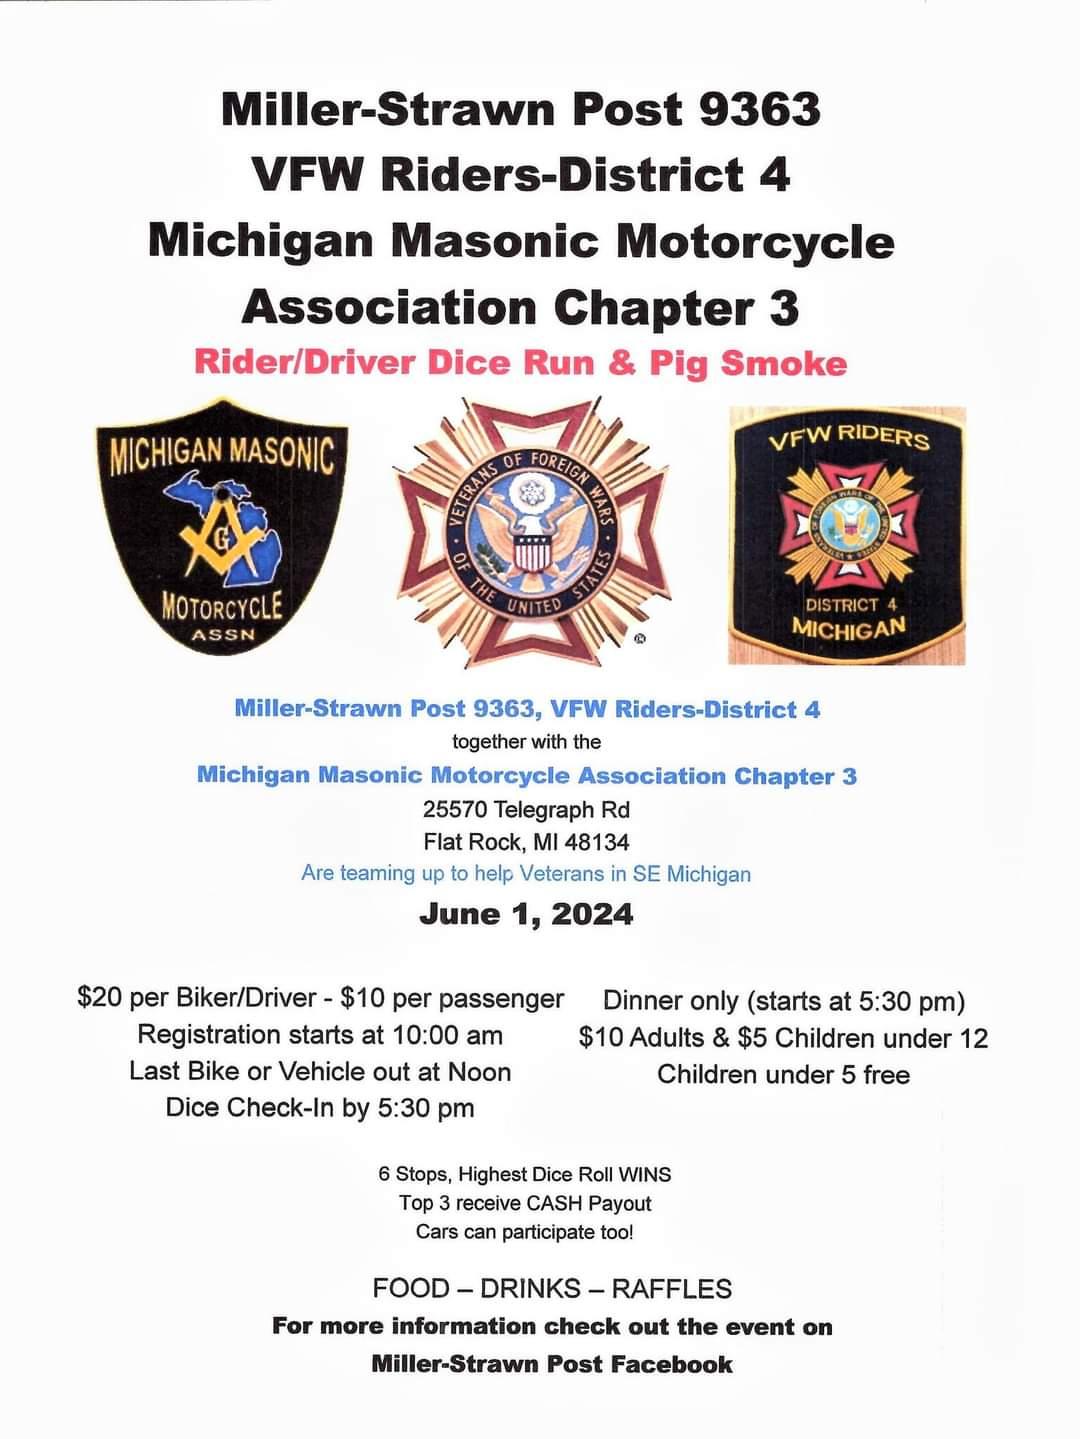 VFW Riders & MMMA Pig Smoke Dice Run